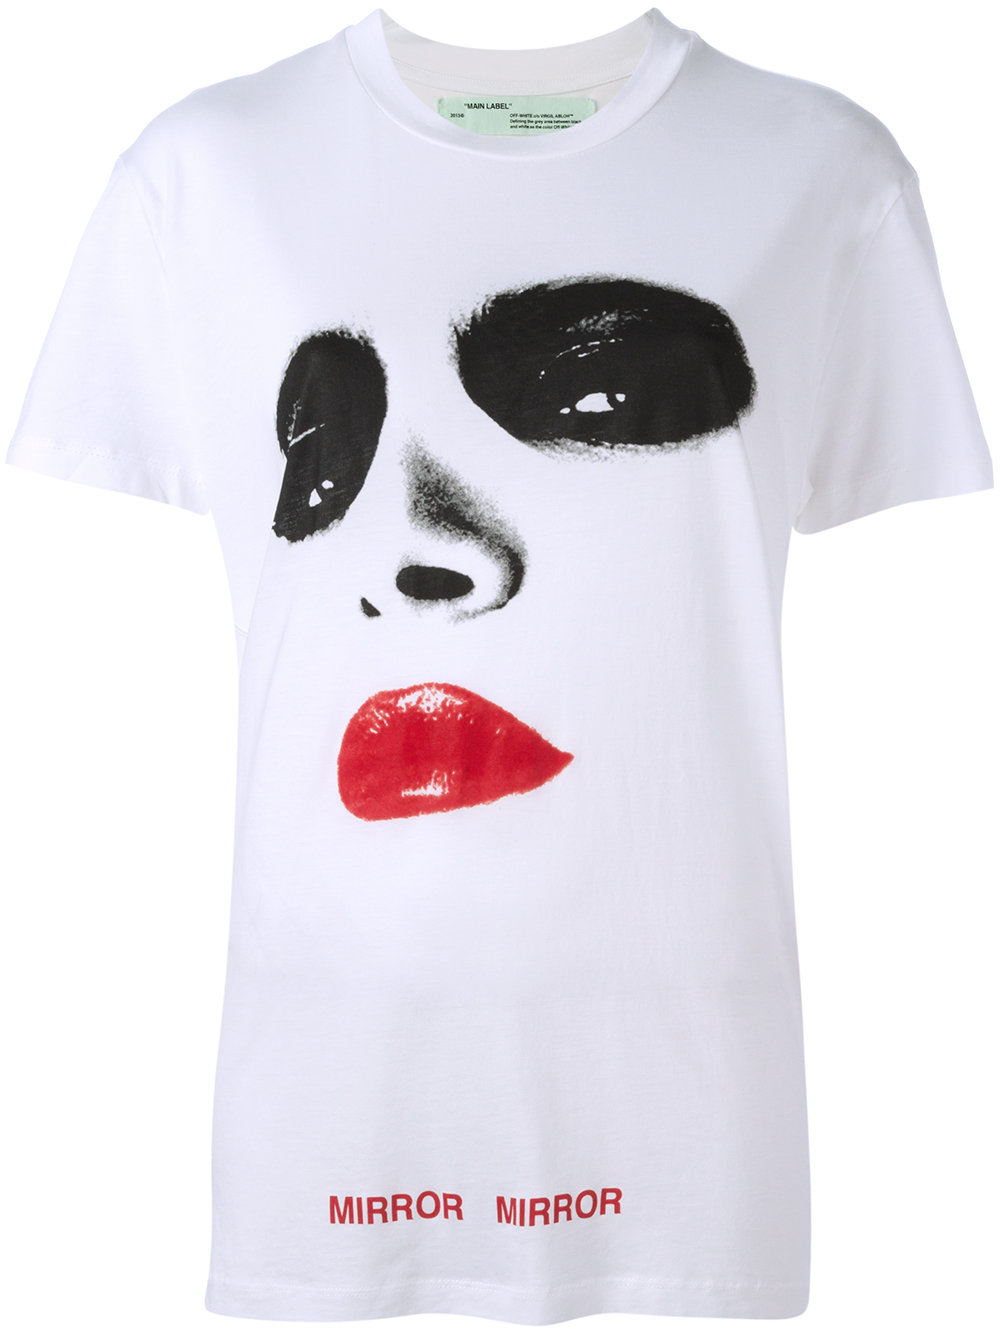 Off-White 'mirror mirror' print T-shirt Cheap BIANCO Women Clothing T-shirts & Jerseys